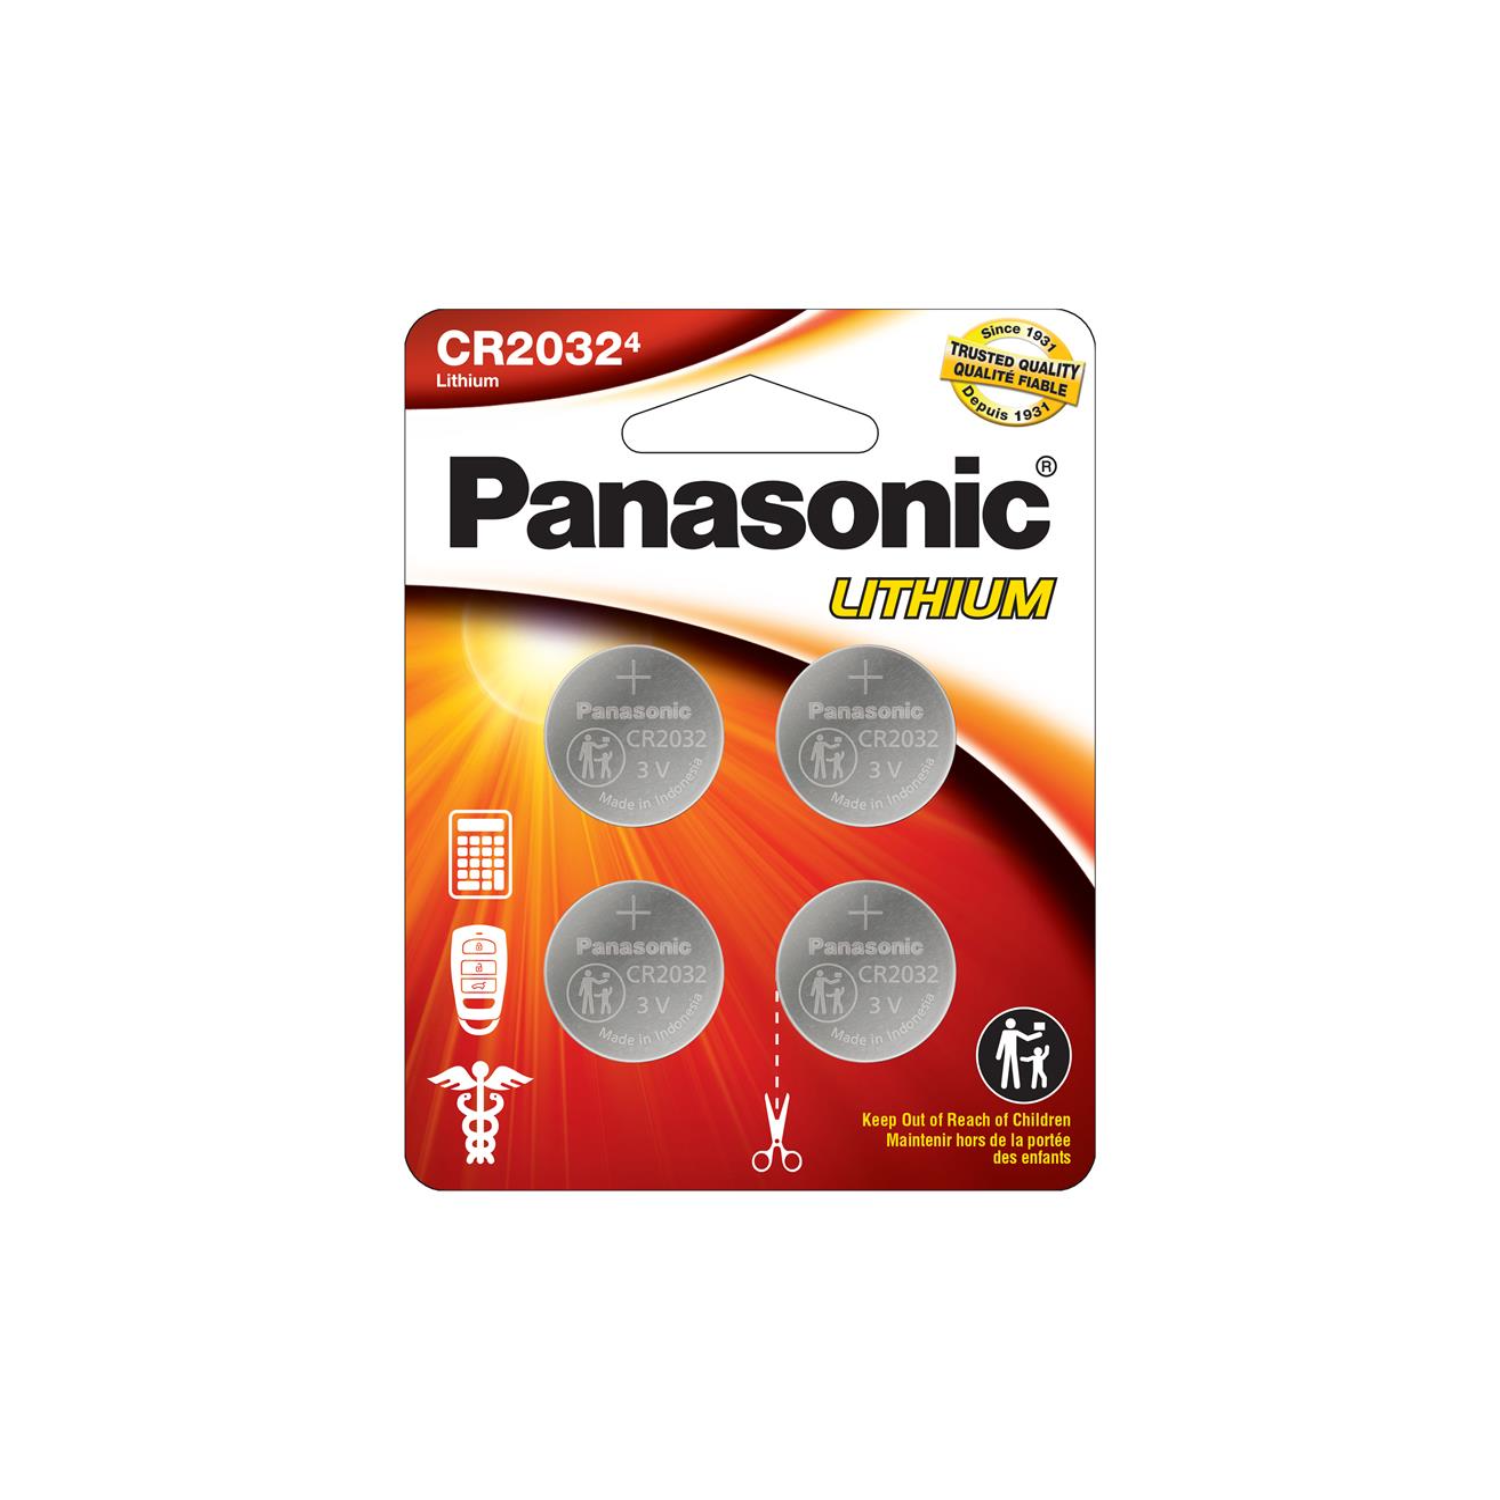 Panasonic 2032 3V Lithium Coin Cell Battery 4 Pack